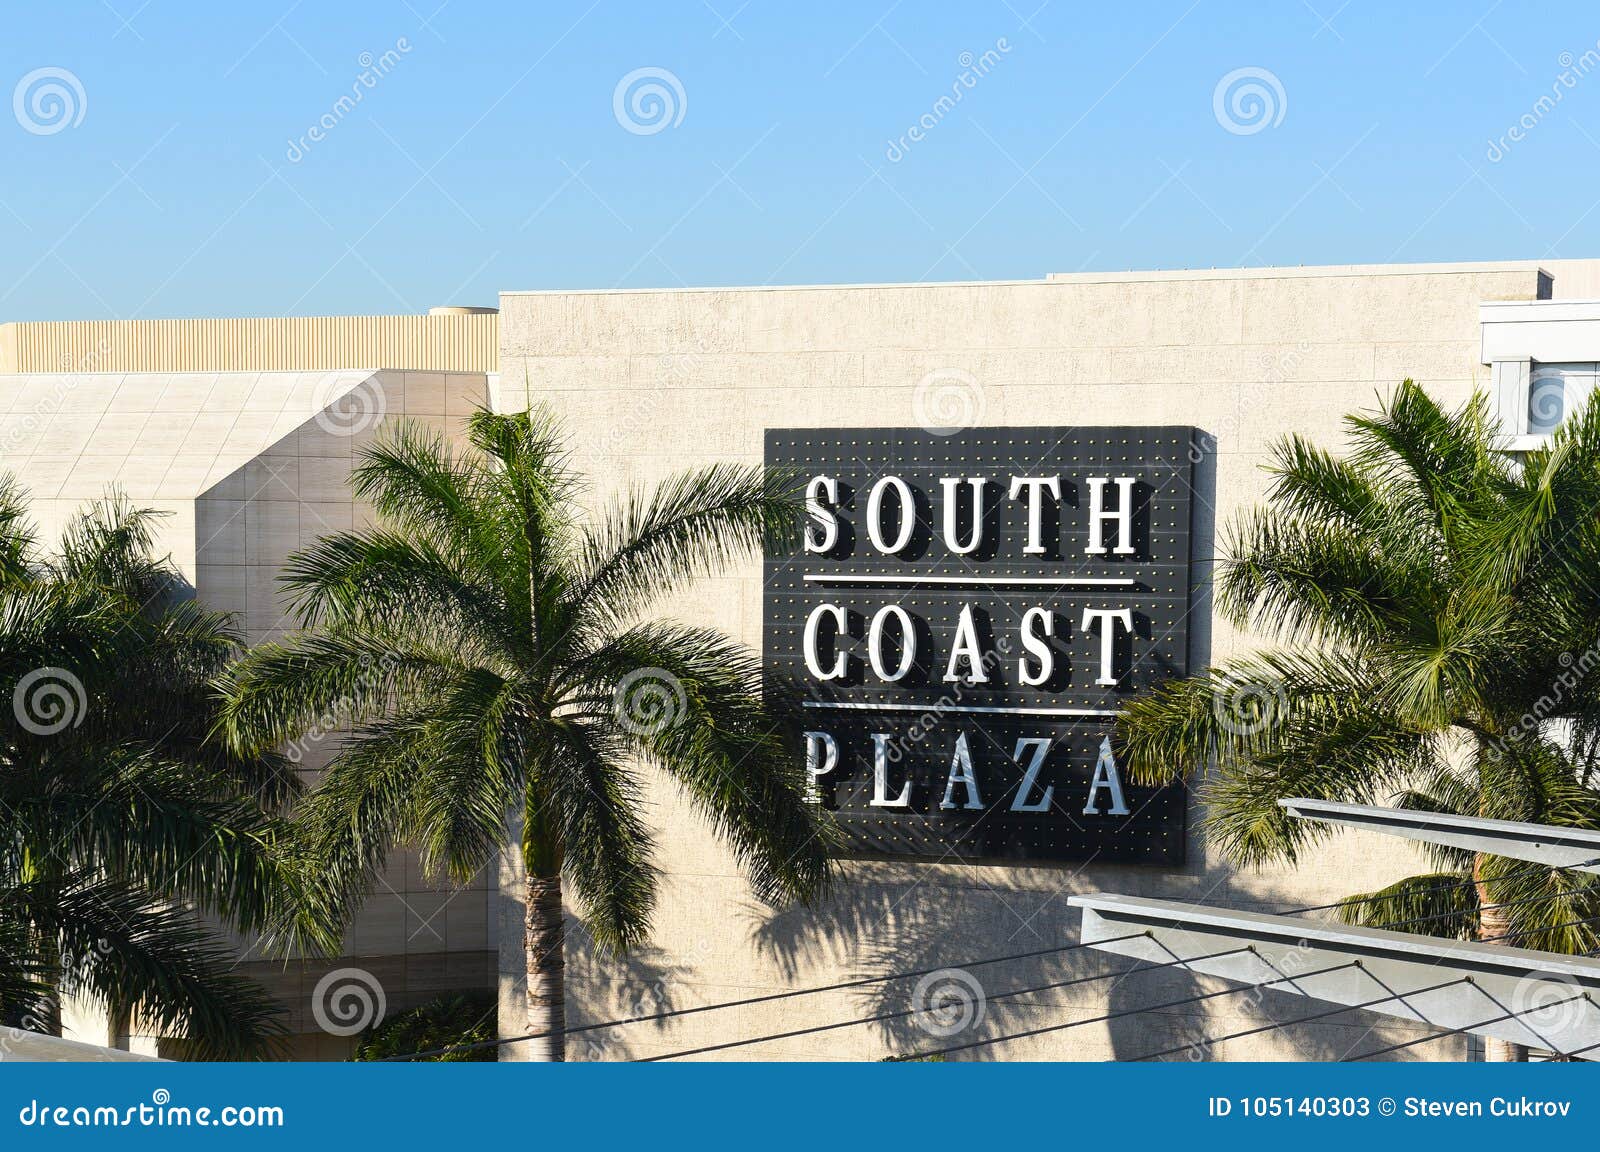 South Coast Plaza Costa Mesa Editorial Stock Photo - Image of center,  upscale: 105140303